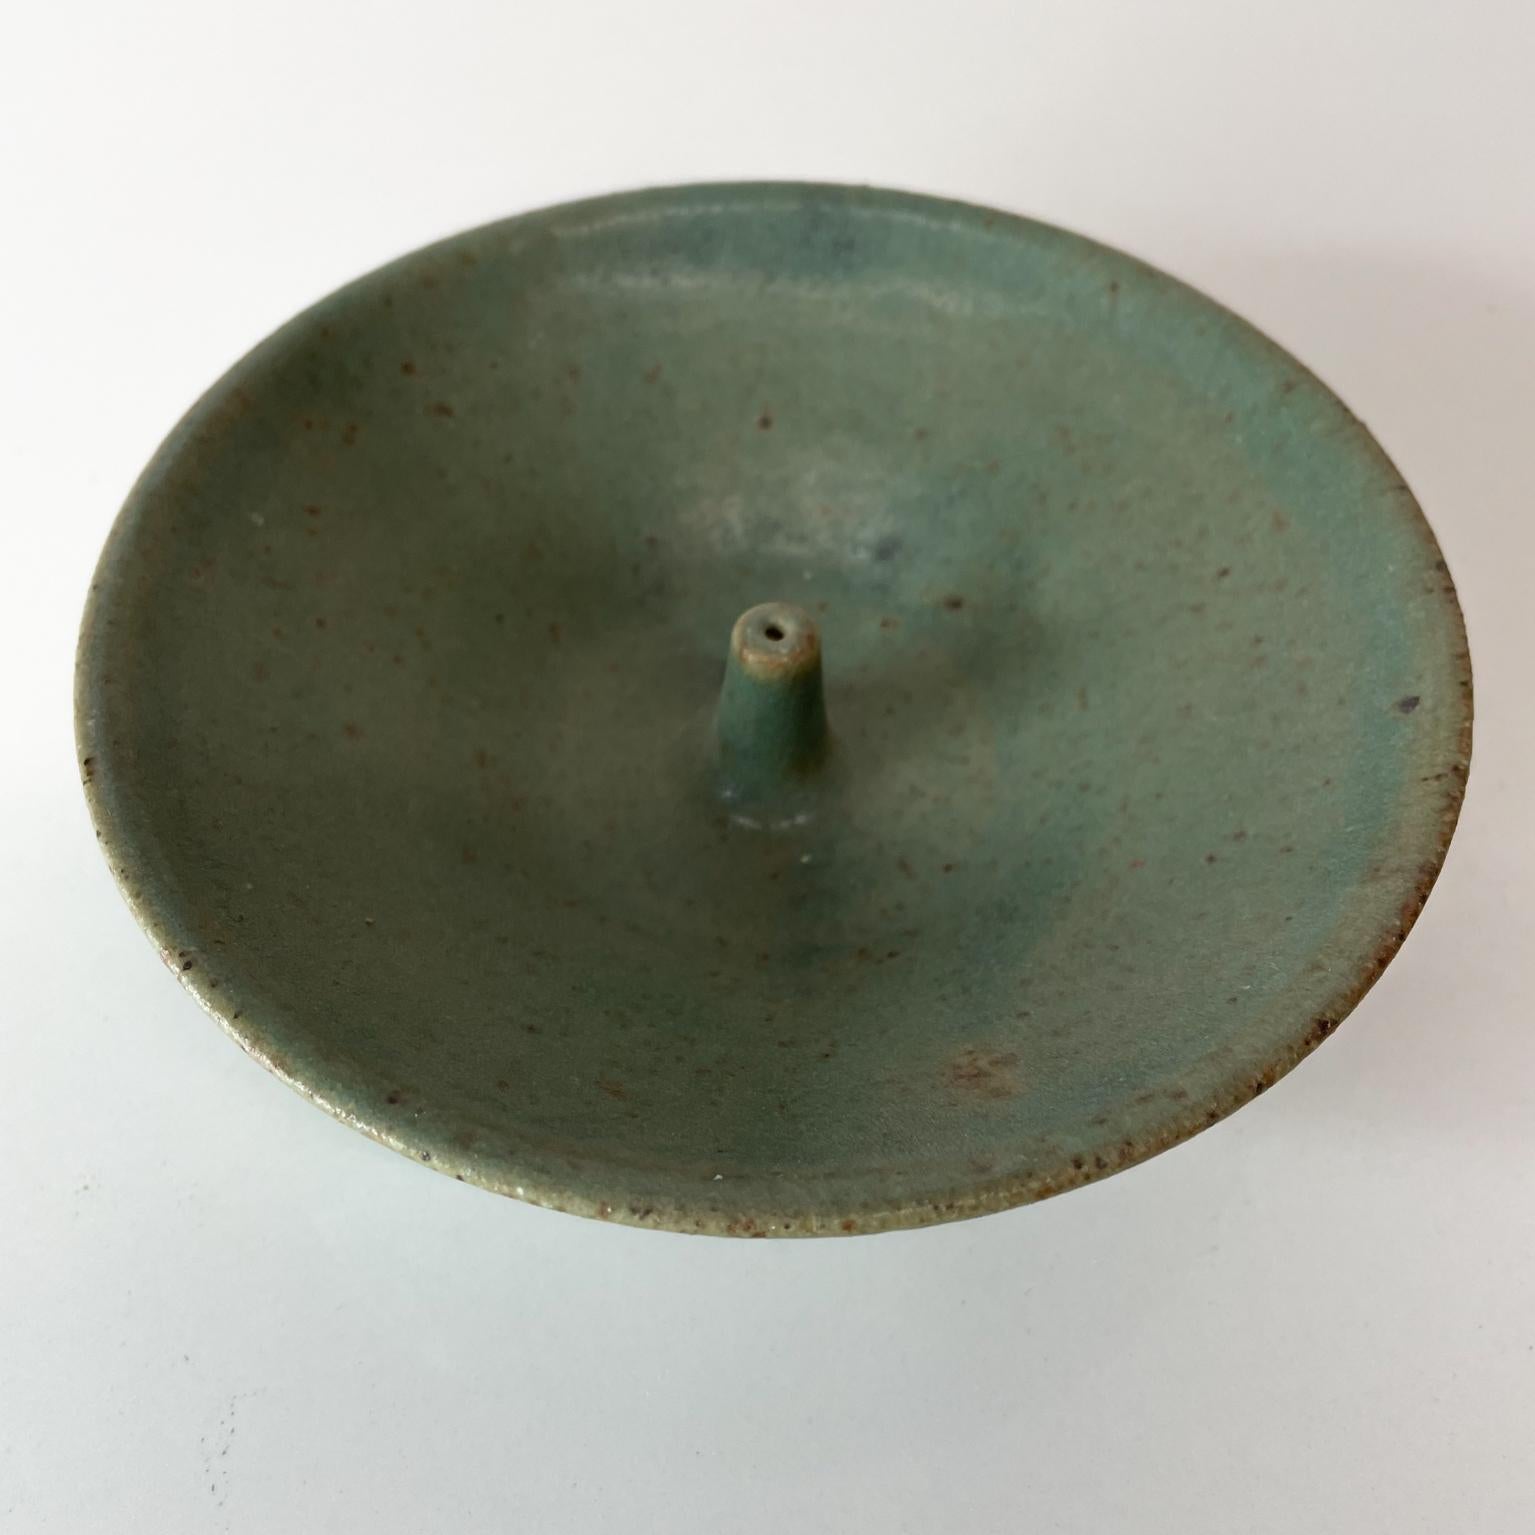 American Sculptural Stoneware Art Pottery Bowl in Fusion Green Glaze 1970s California